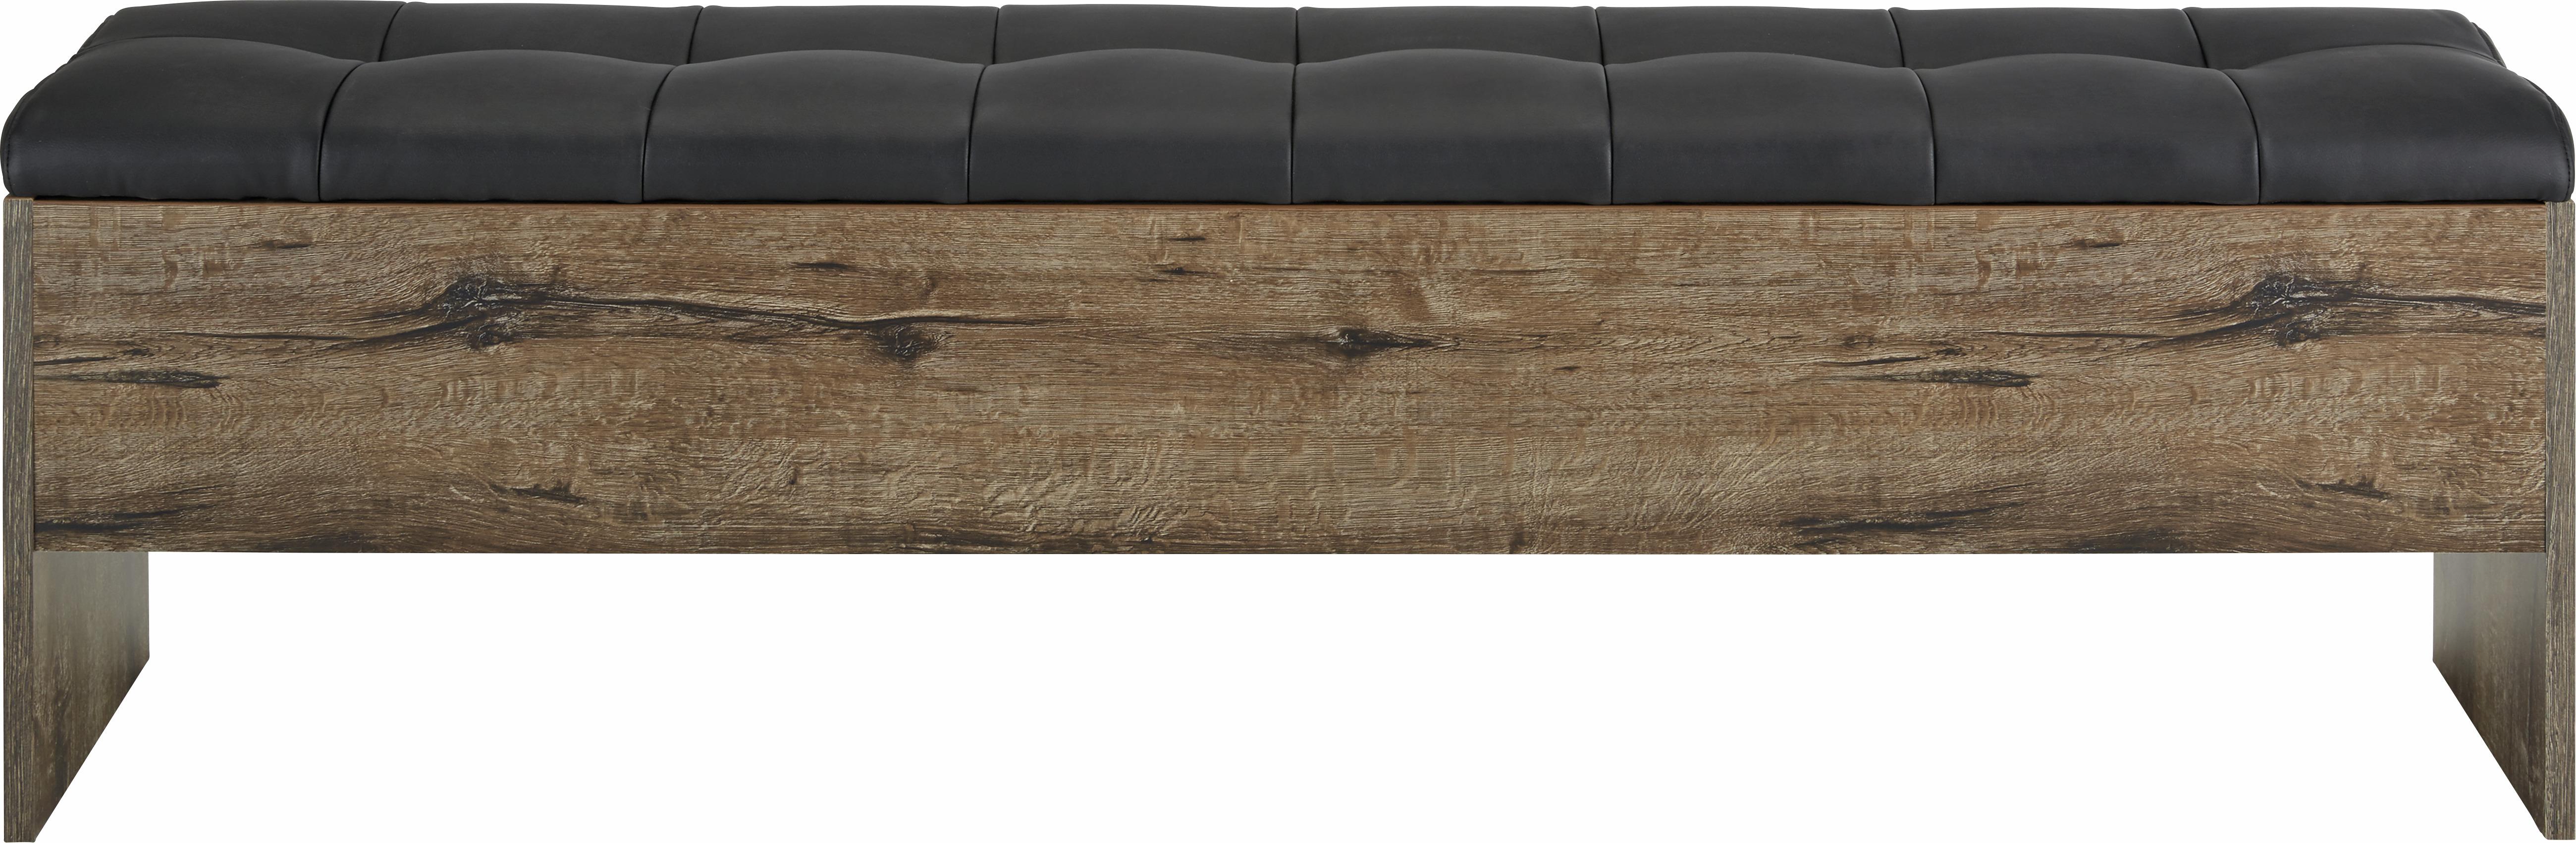 Škrinja-klupa Bellevue - boje hrasta/crna, Lifestyle, drvni materijal/koža (185/54/34,8cm) - Modern Living